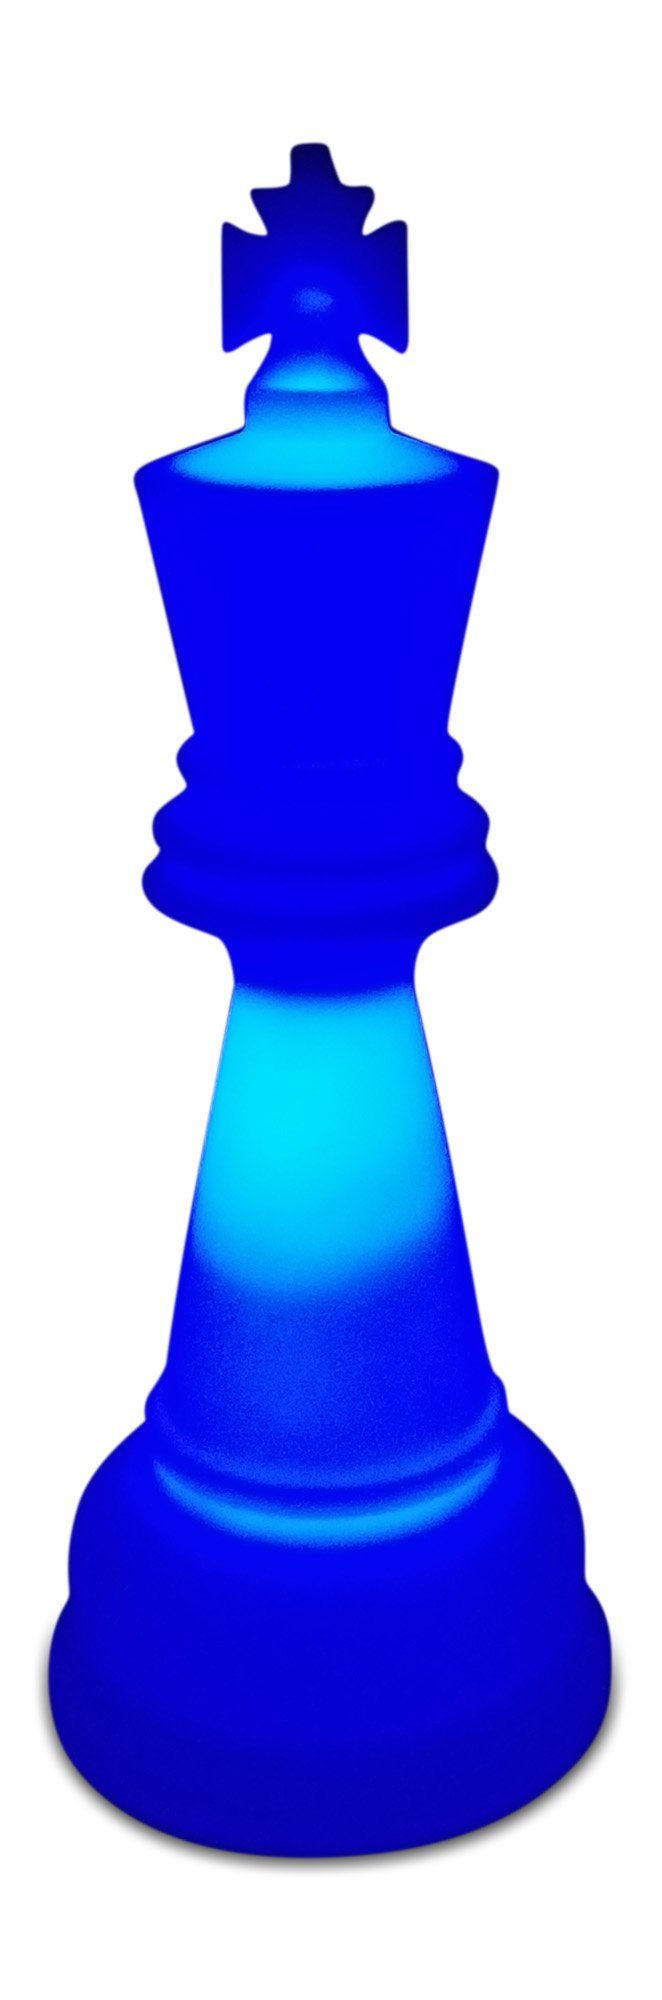 MegaChess - 48-Inch Blue Light Up King Chess Piece